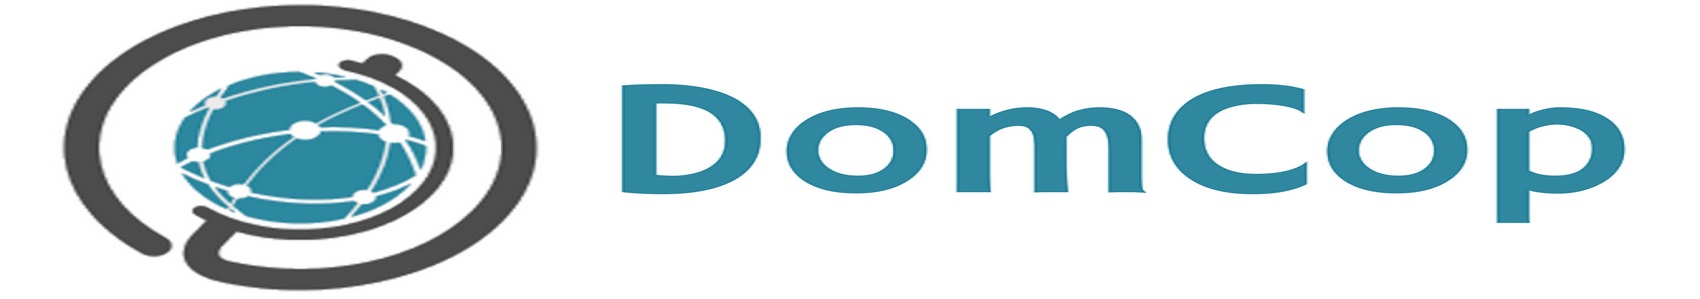 DomCop logo